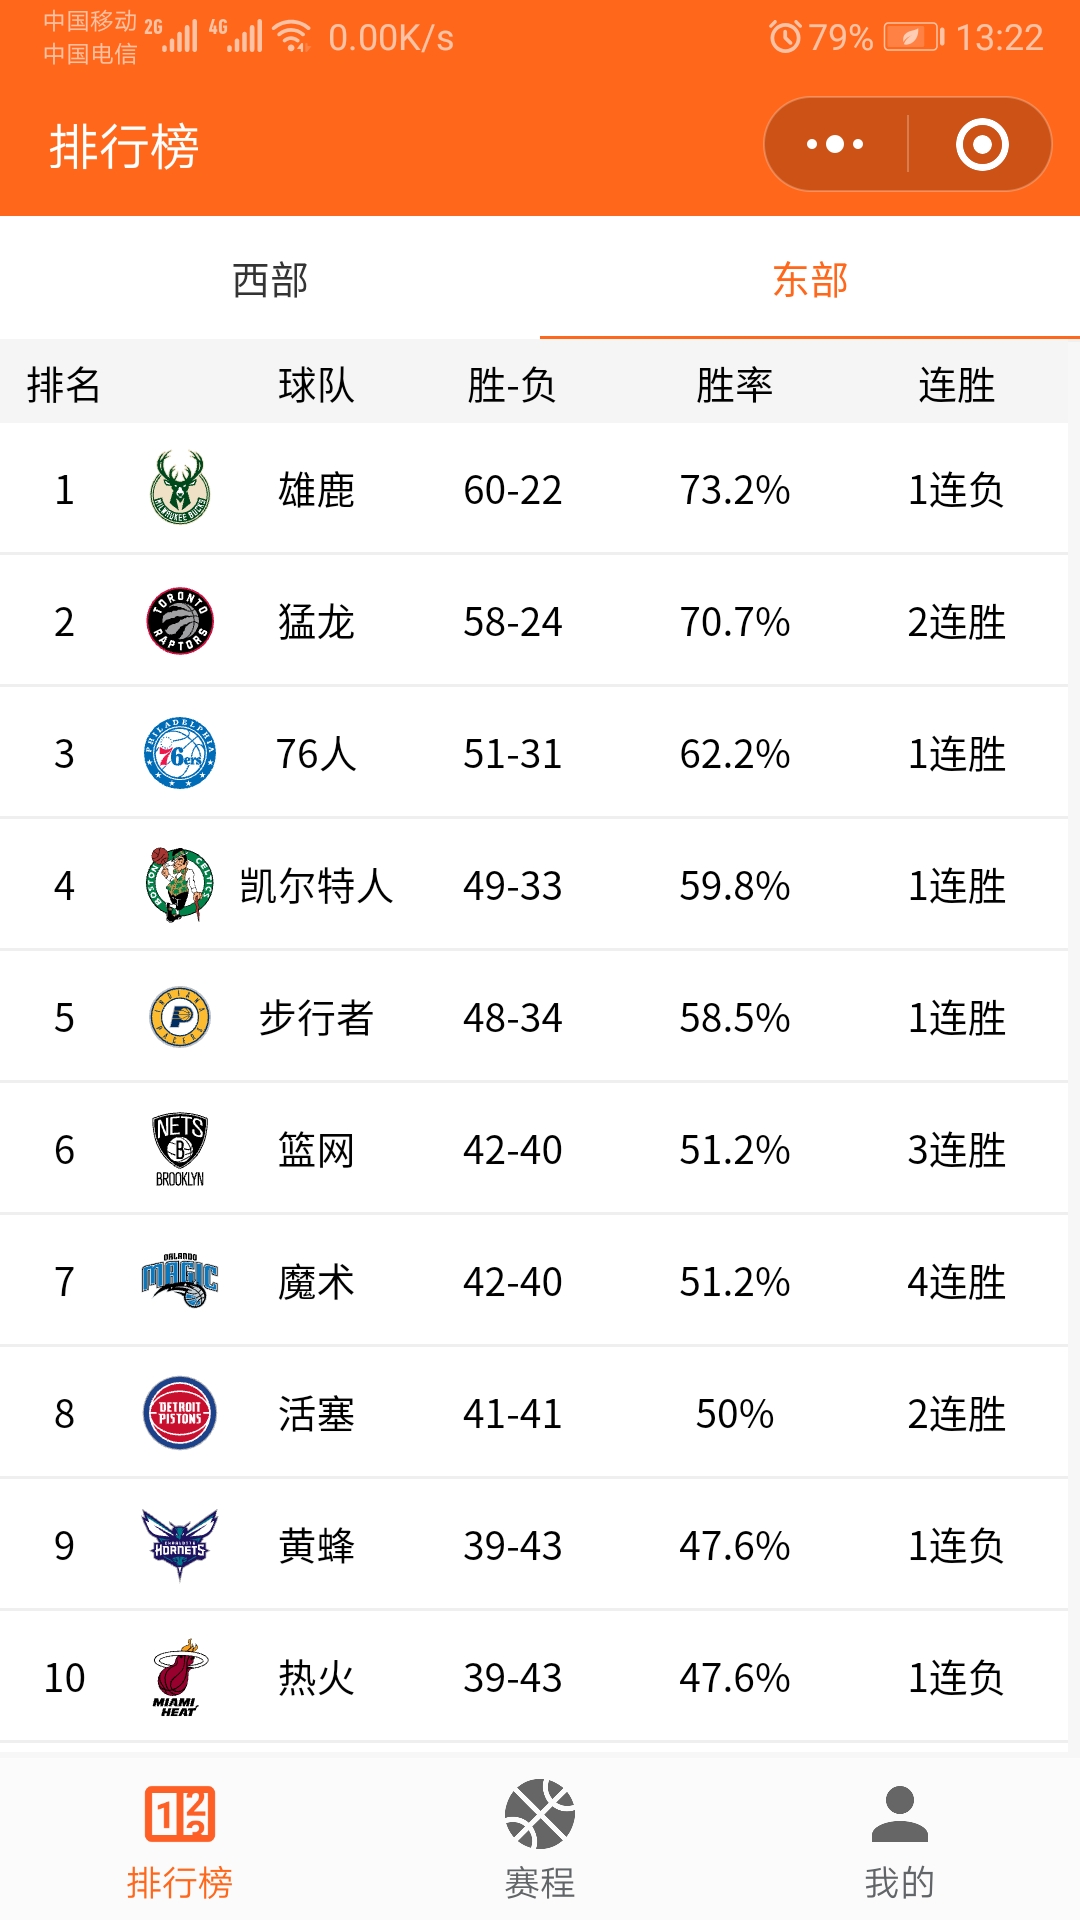 NBA数据统计